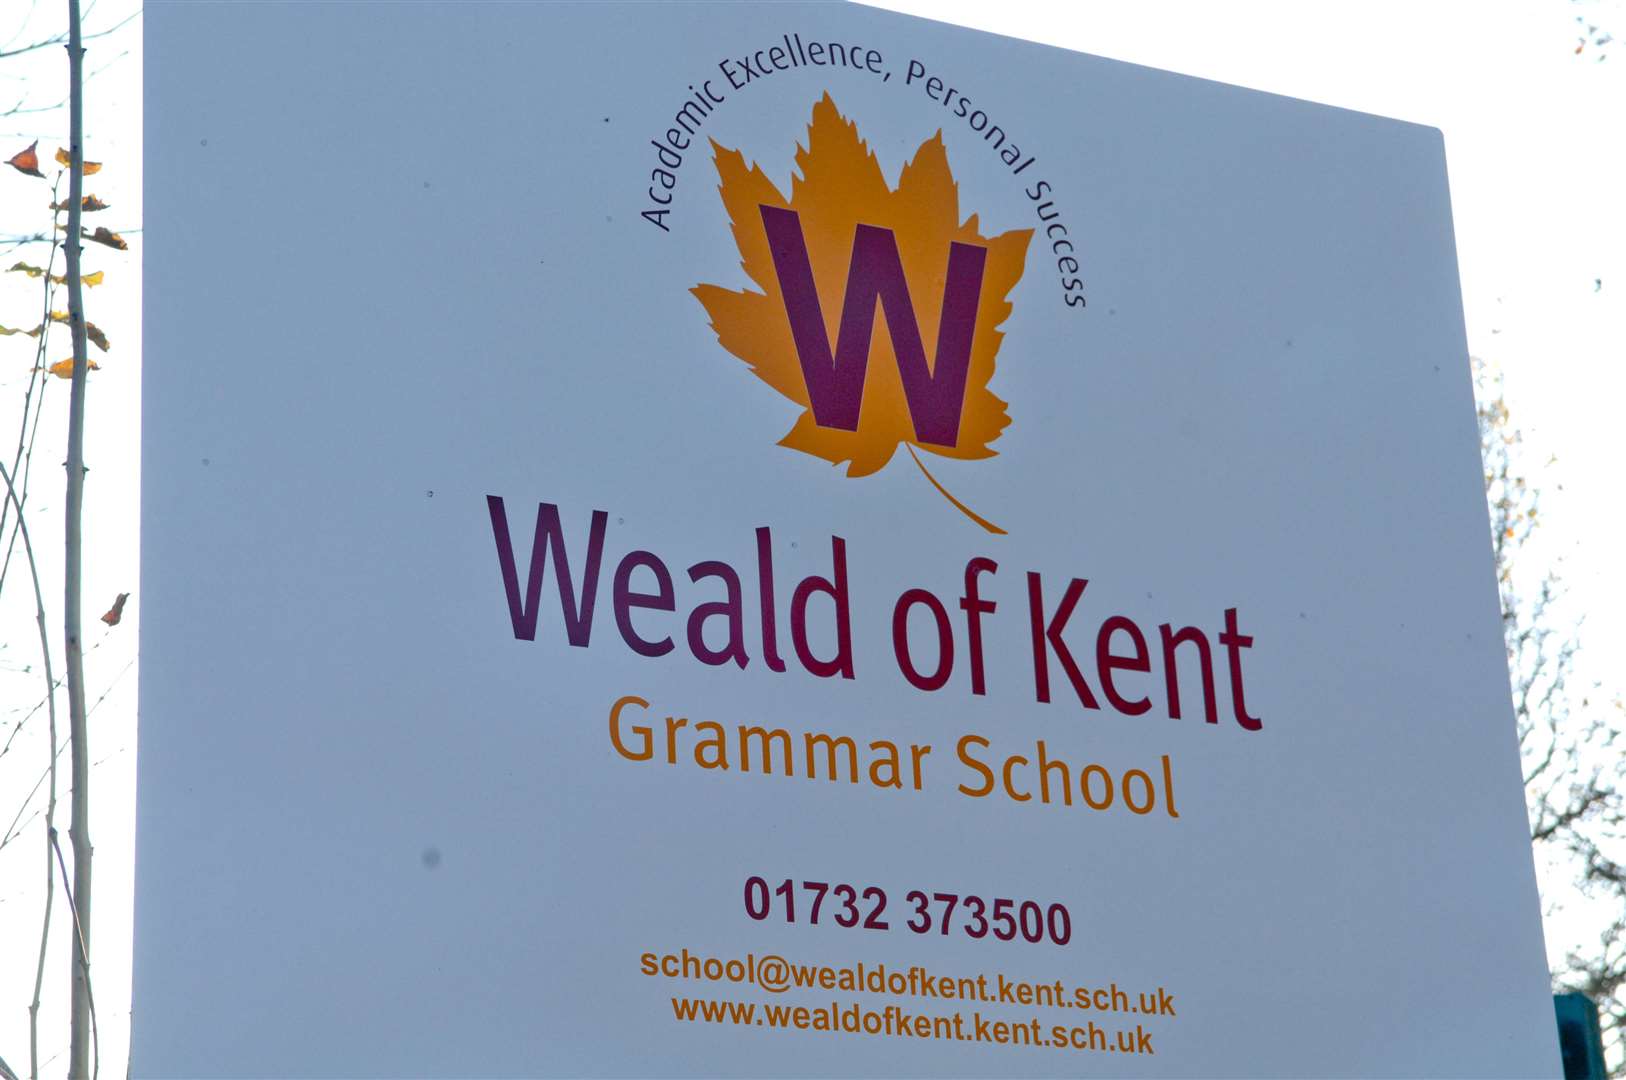 The Weald of Kent grammar school recently opened an annexe in Sevenoaks